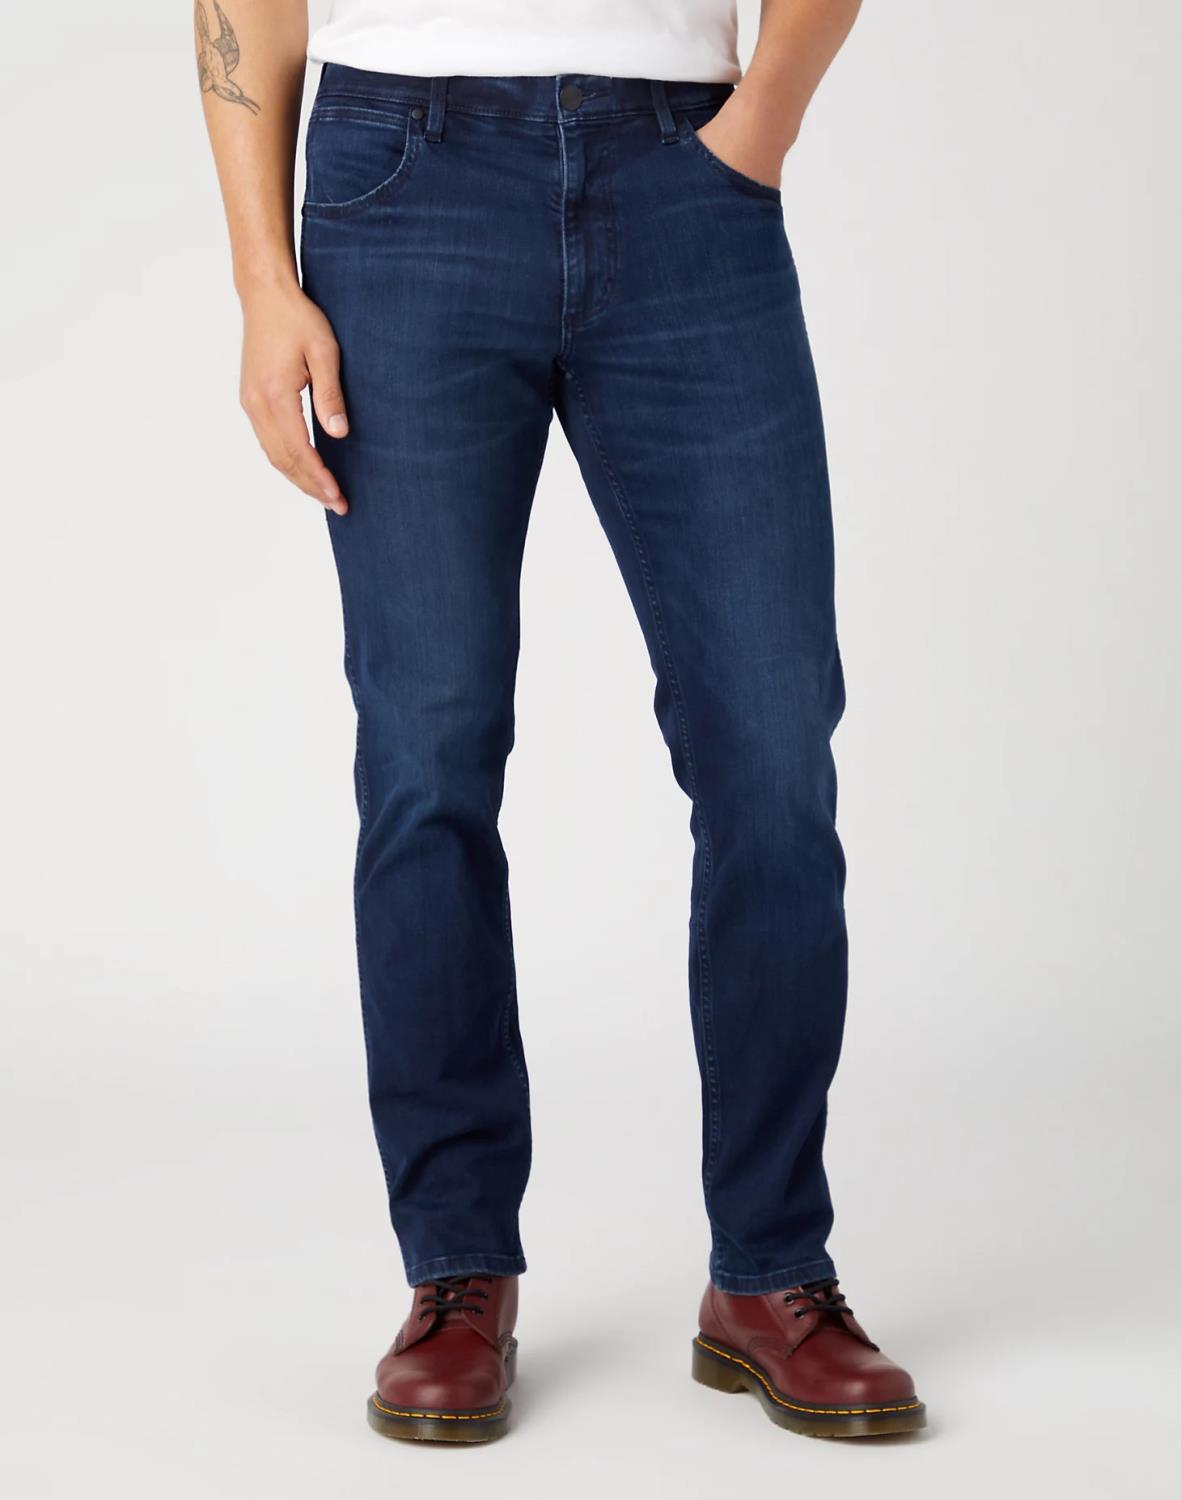 Wrangler Greensboro Jeans - Arm Strong